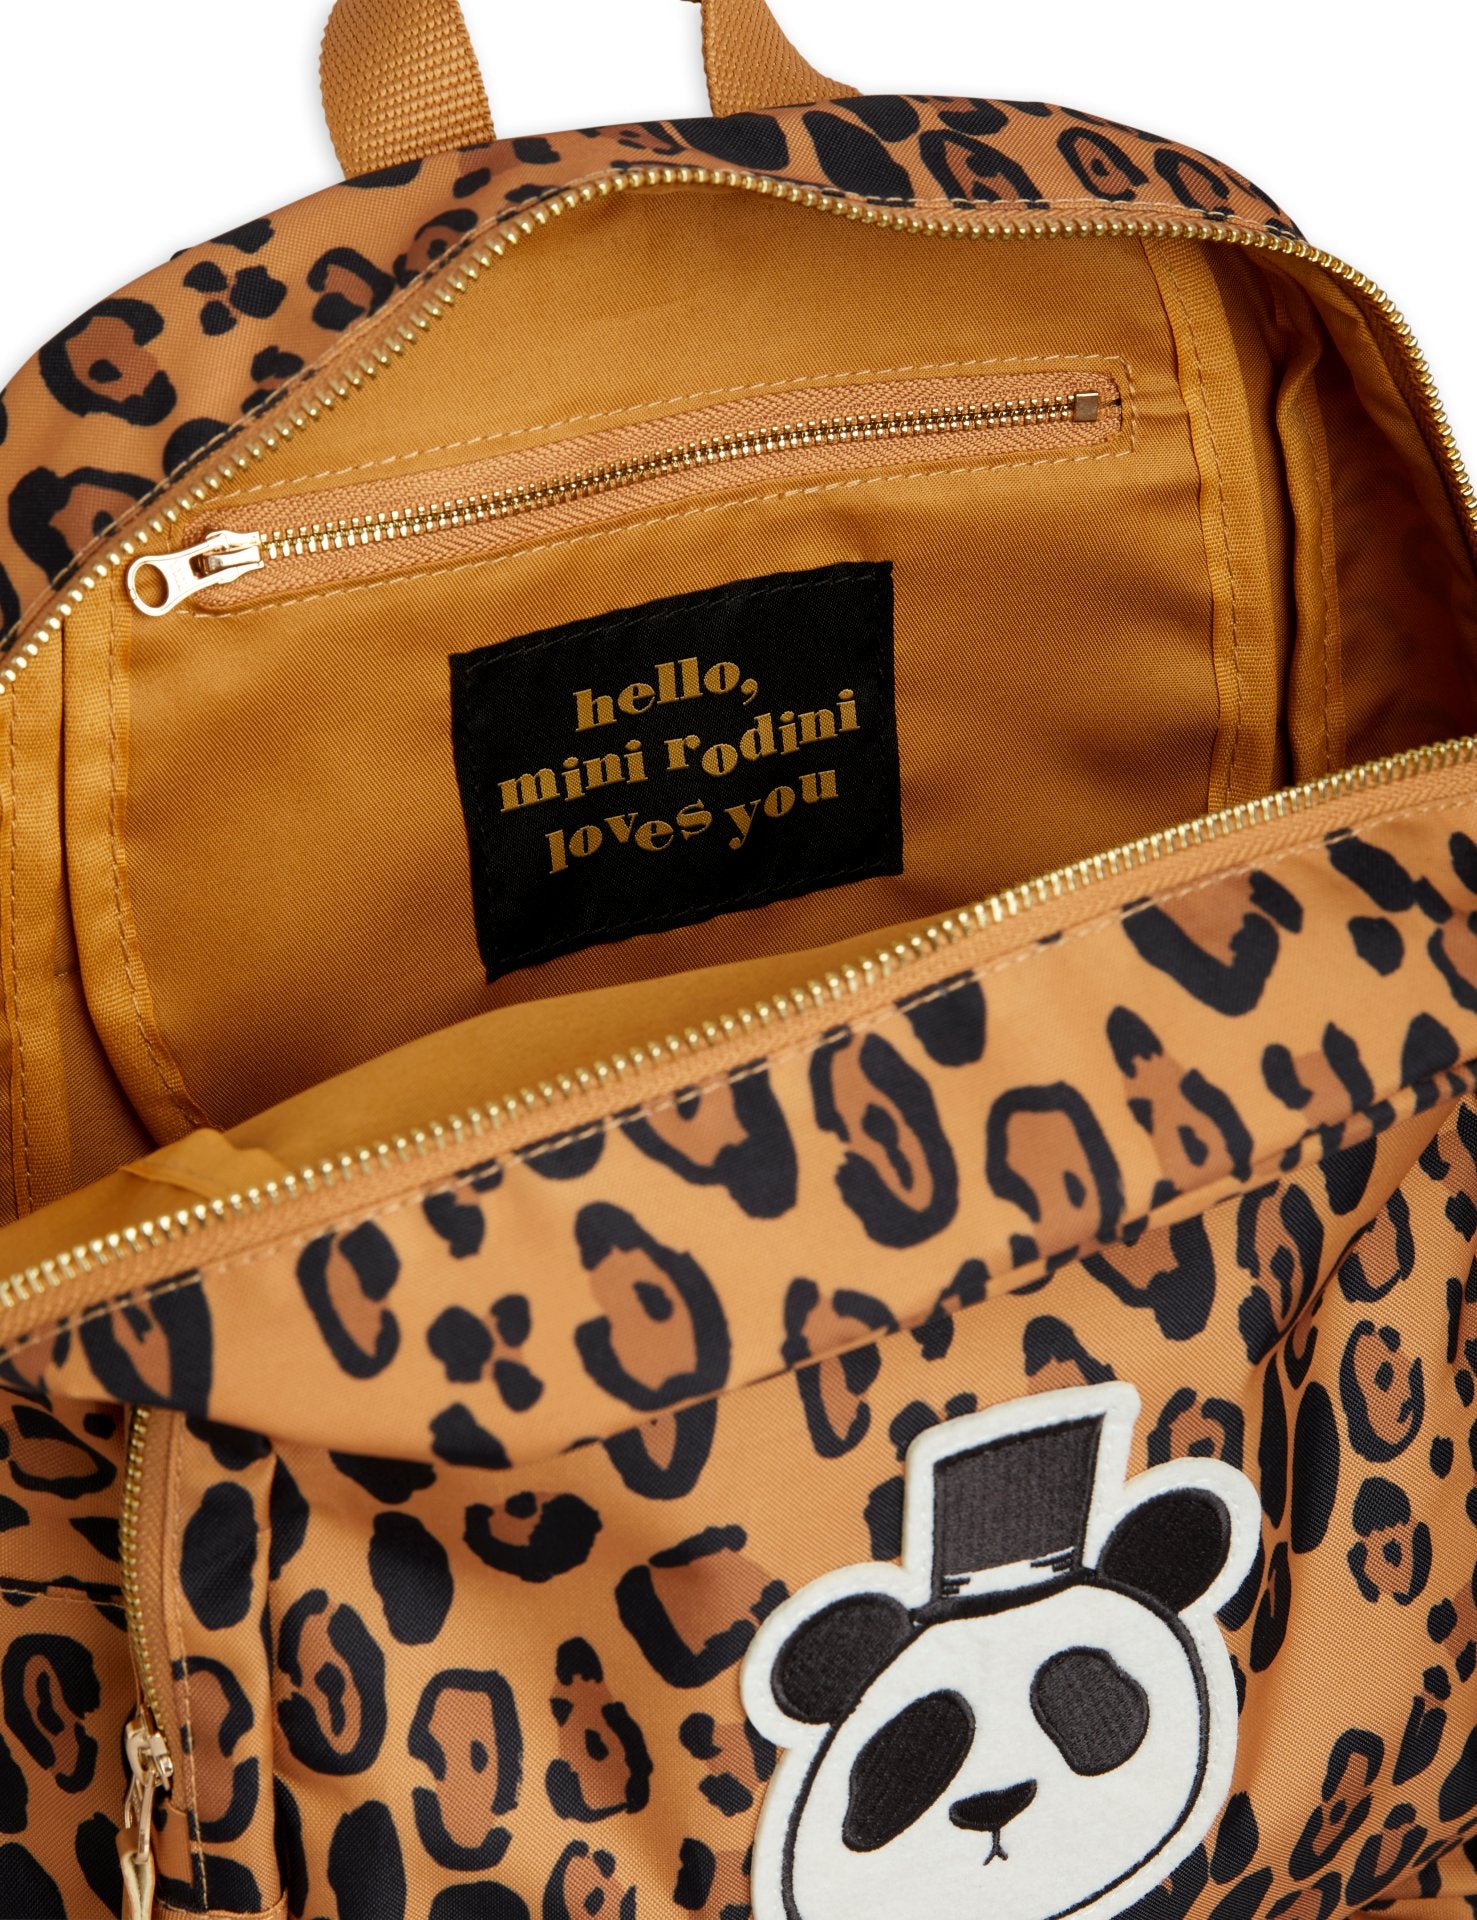 Panda backpack